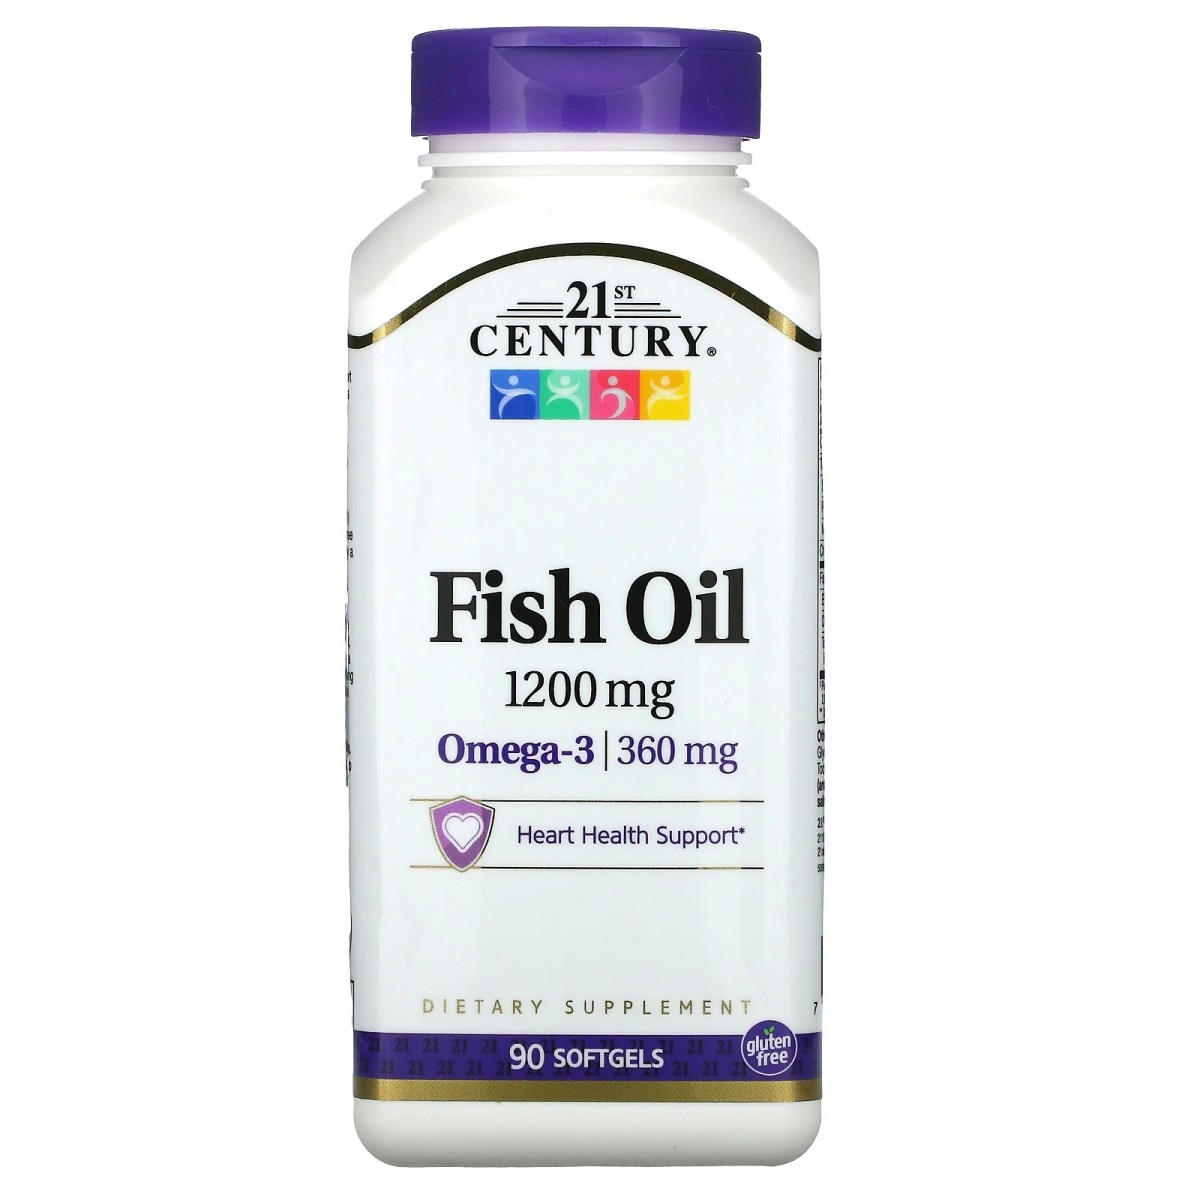 Fish Oil Maximum Strength 1200 mg 21st Century 90 Softgels